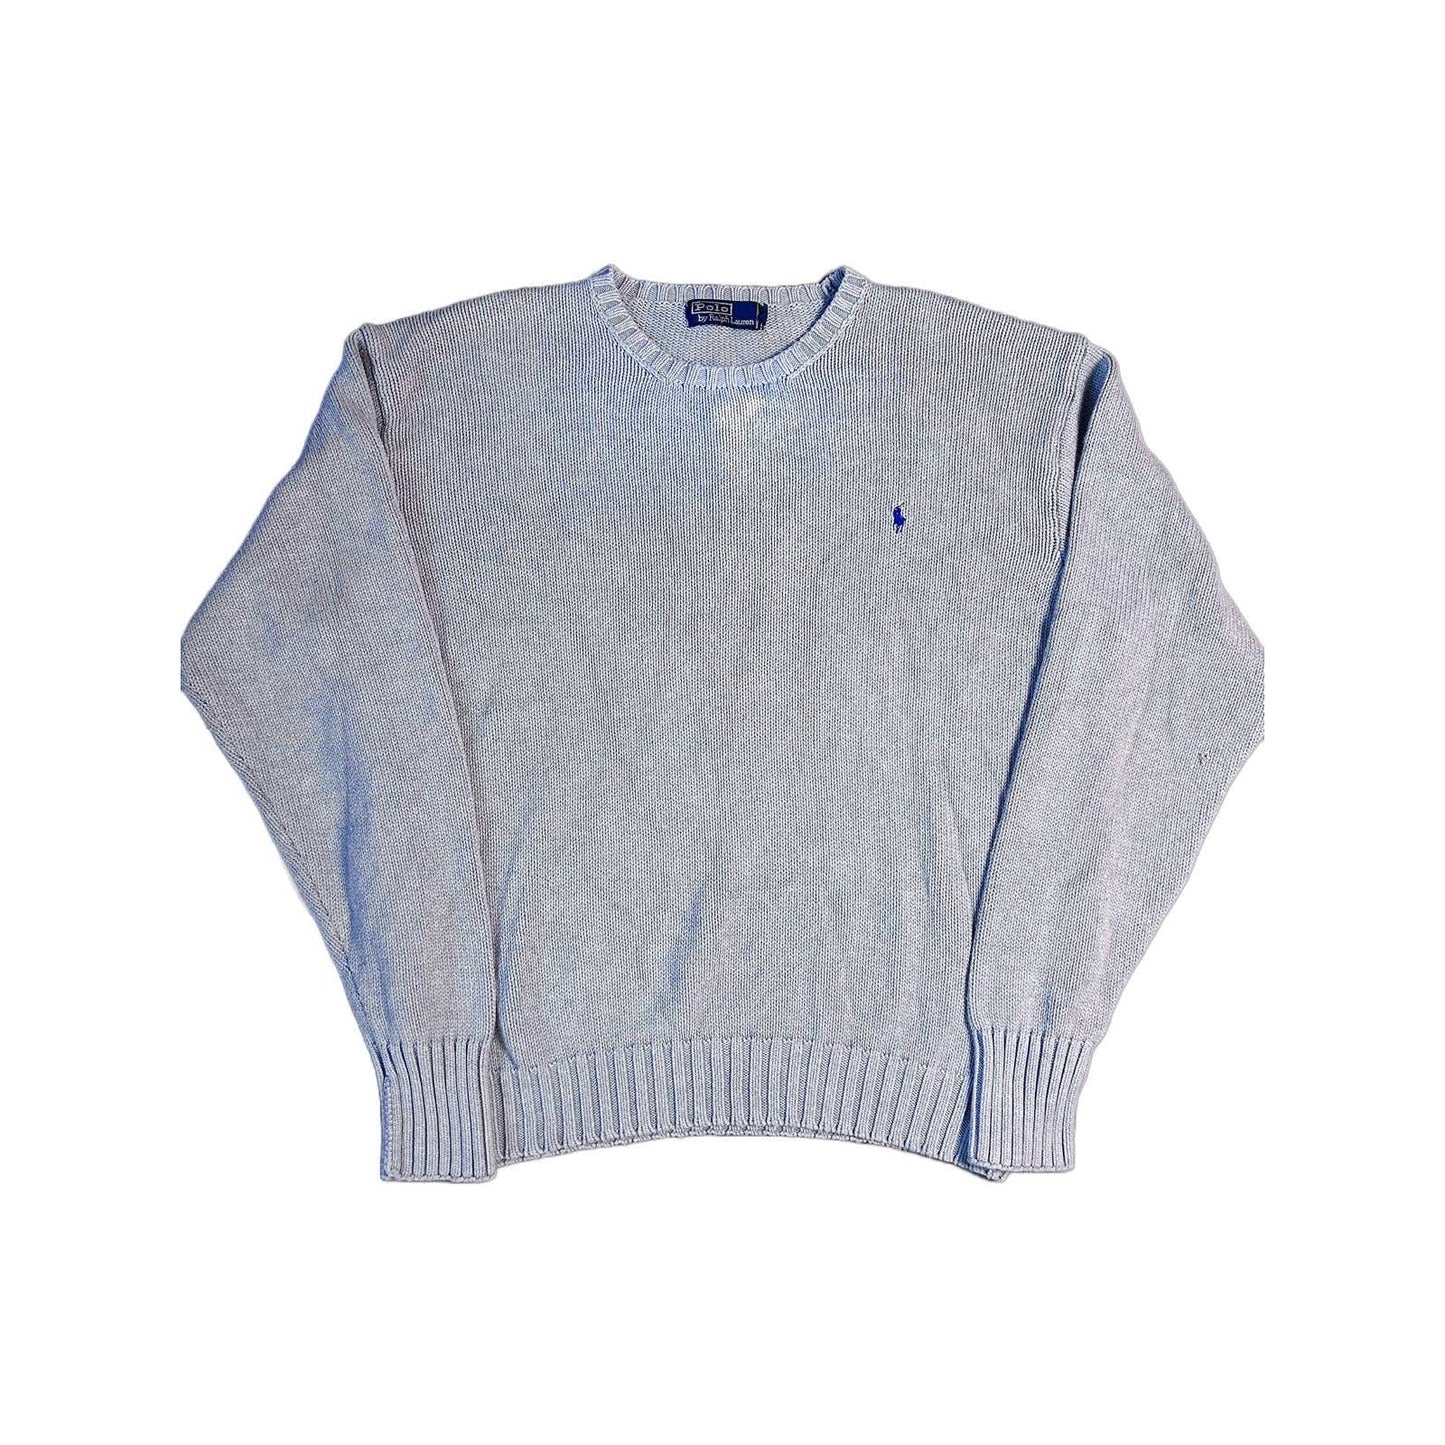 Polo Ralph Lauren baby blue sweater vintage knit